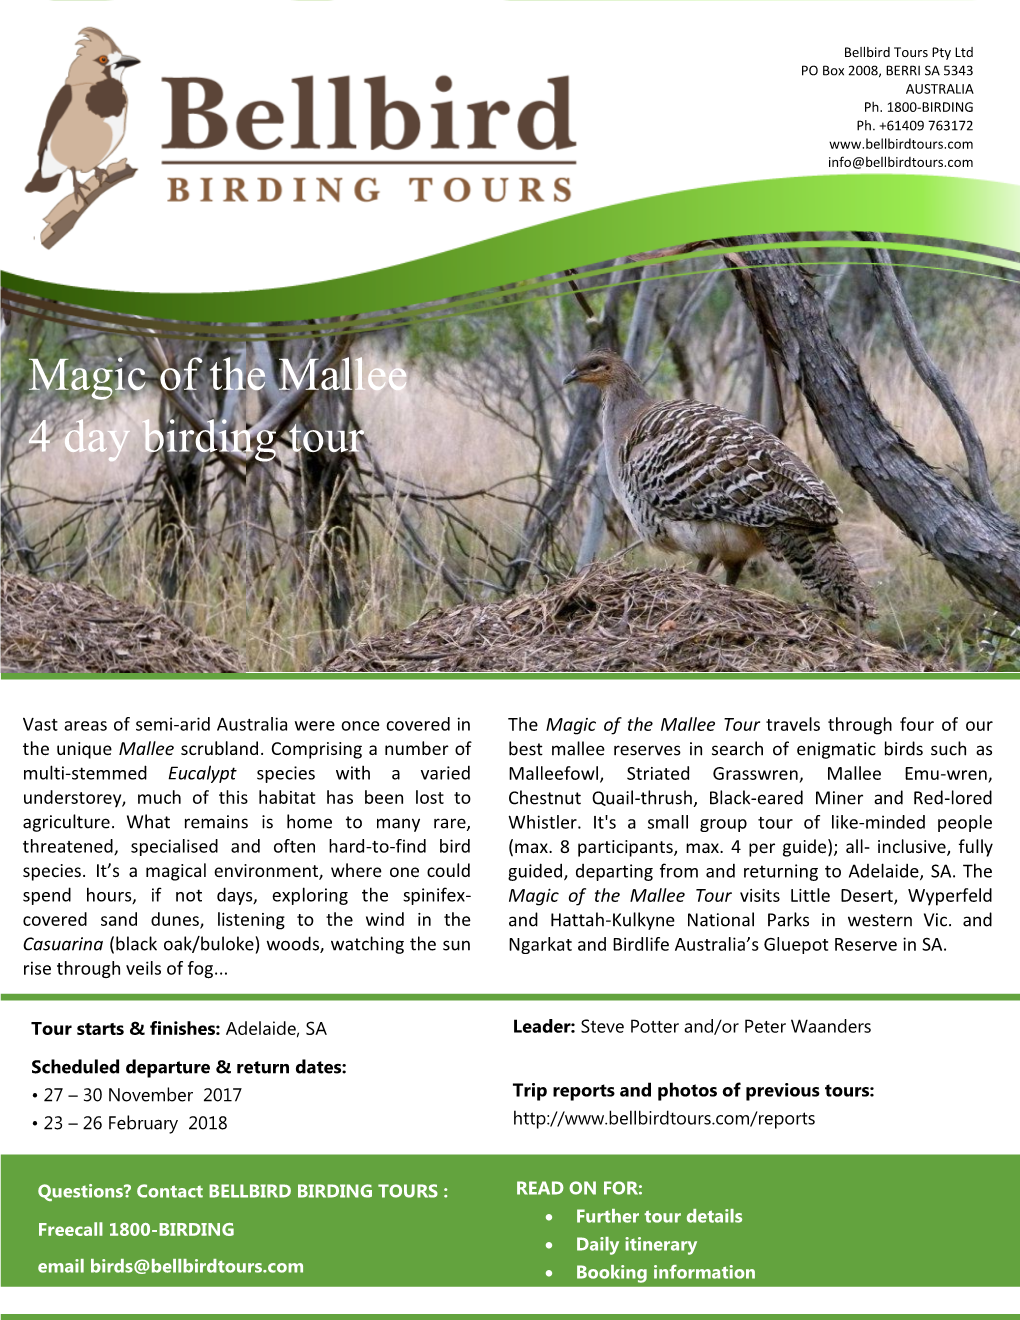 Magic of the Mallee 4 Day Birding Tour